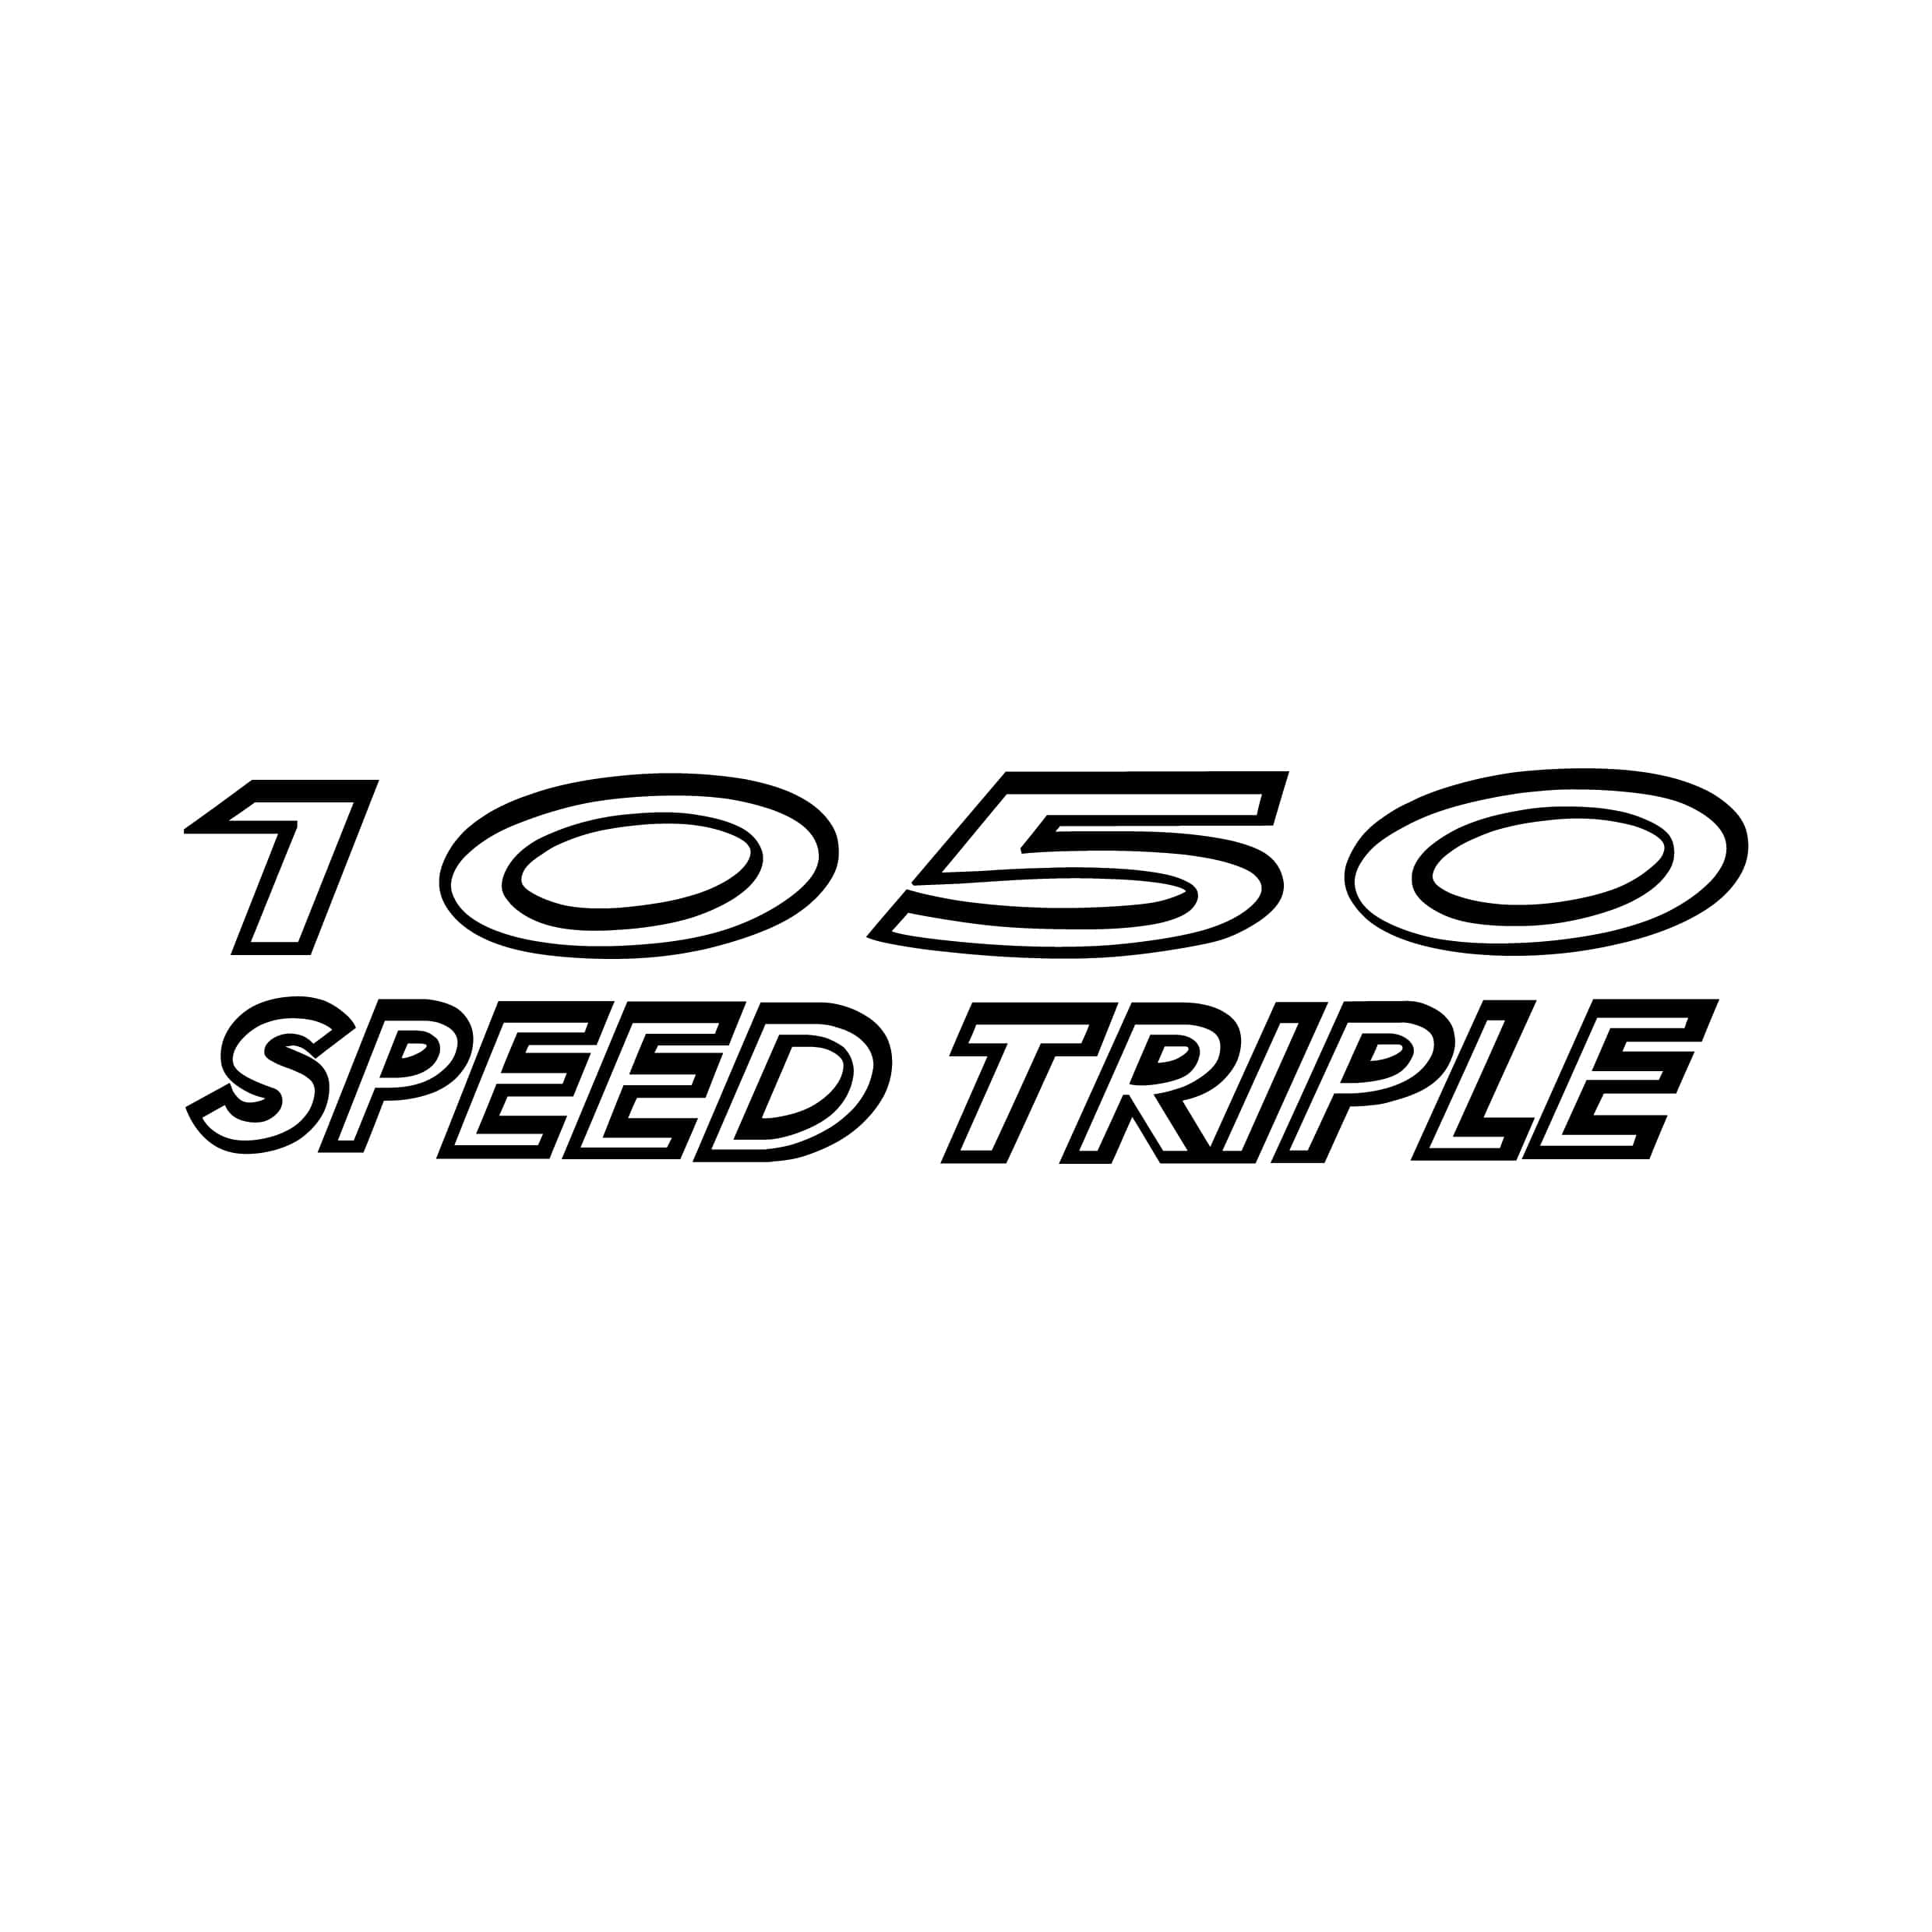 stickers-1050-speed-triple-triumph-ref17-autocollant-moto-sticker-deux-roue-autocollants-decals-sponsors-tuning-sport-logo-bike-scooter-min